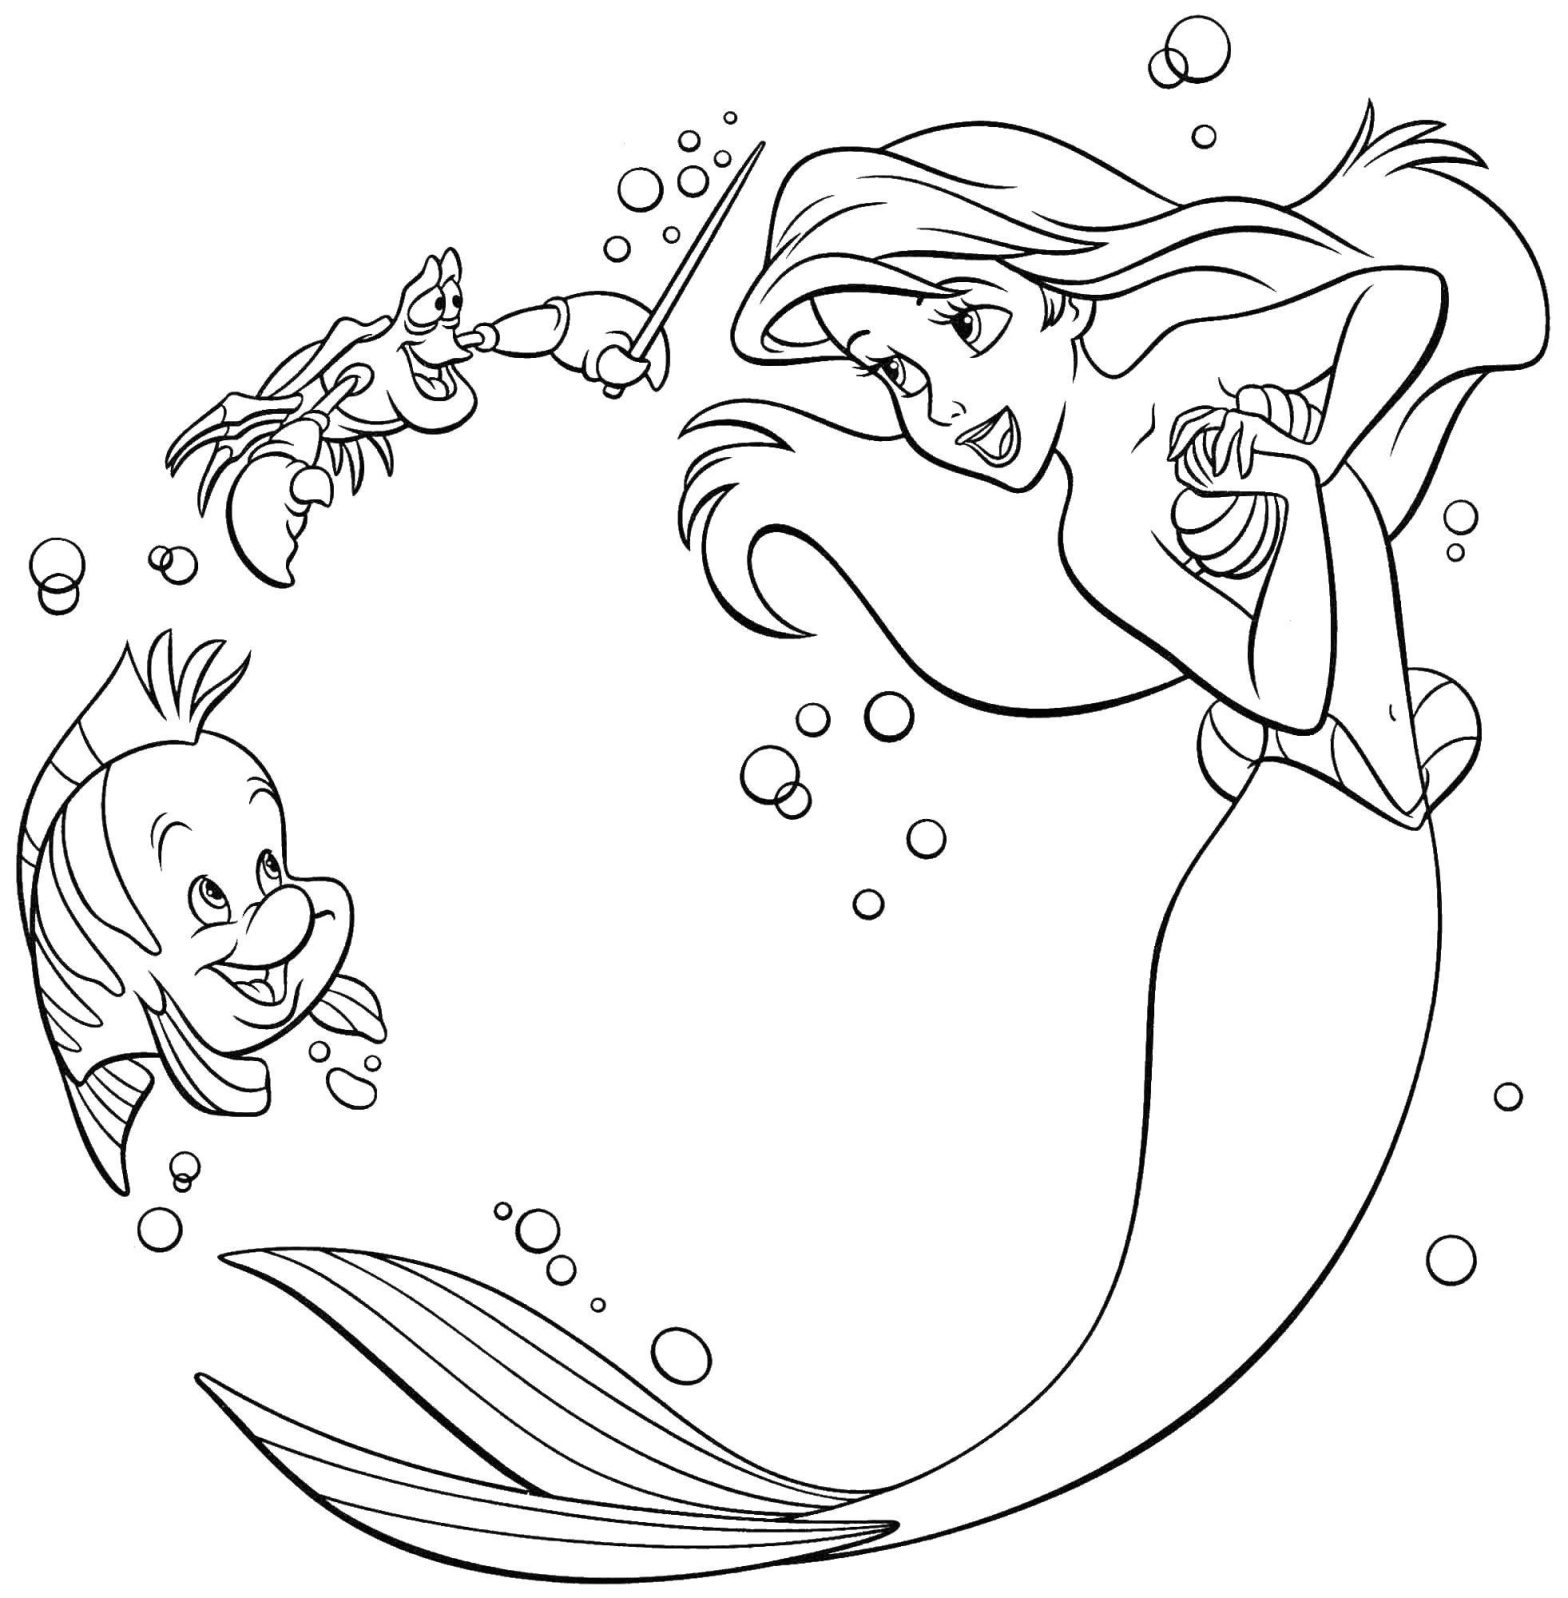 Раскраска Русалочка - принцесса из сказки для девочек (русалочка, принцесса, Ариэль)